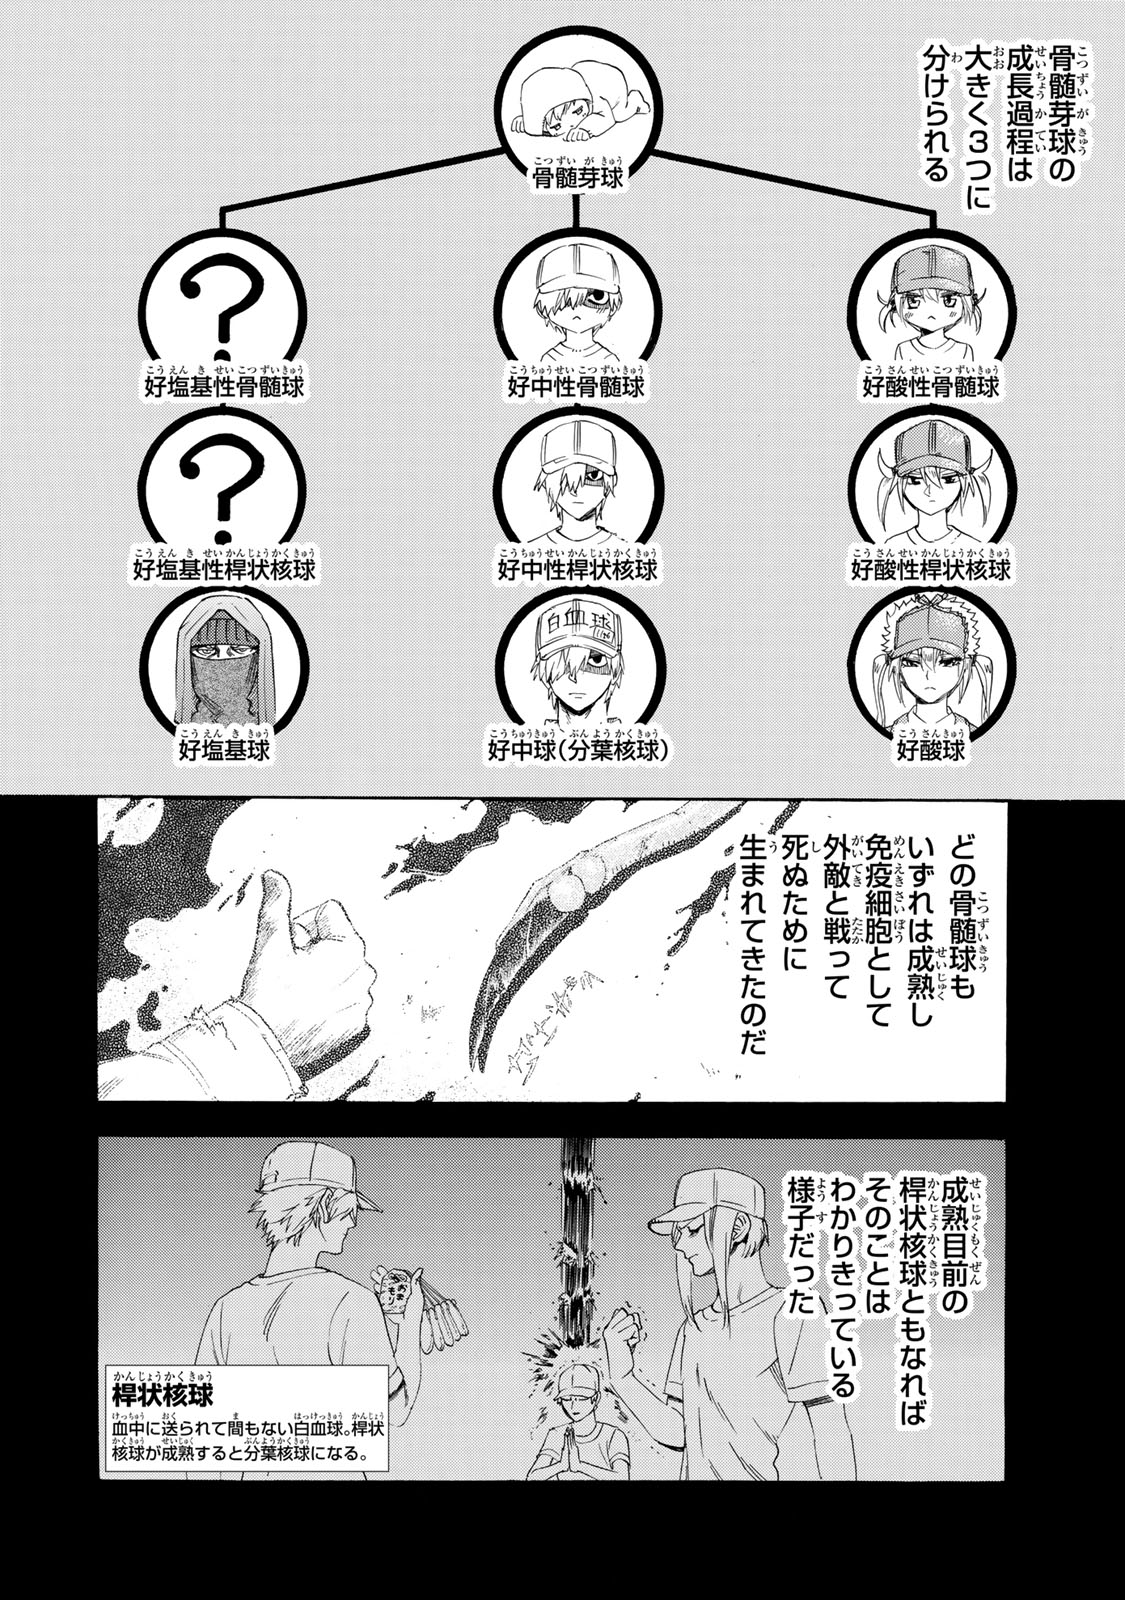 Hataraku Saibou - Chapter 27 - Page 4